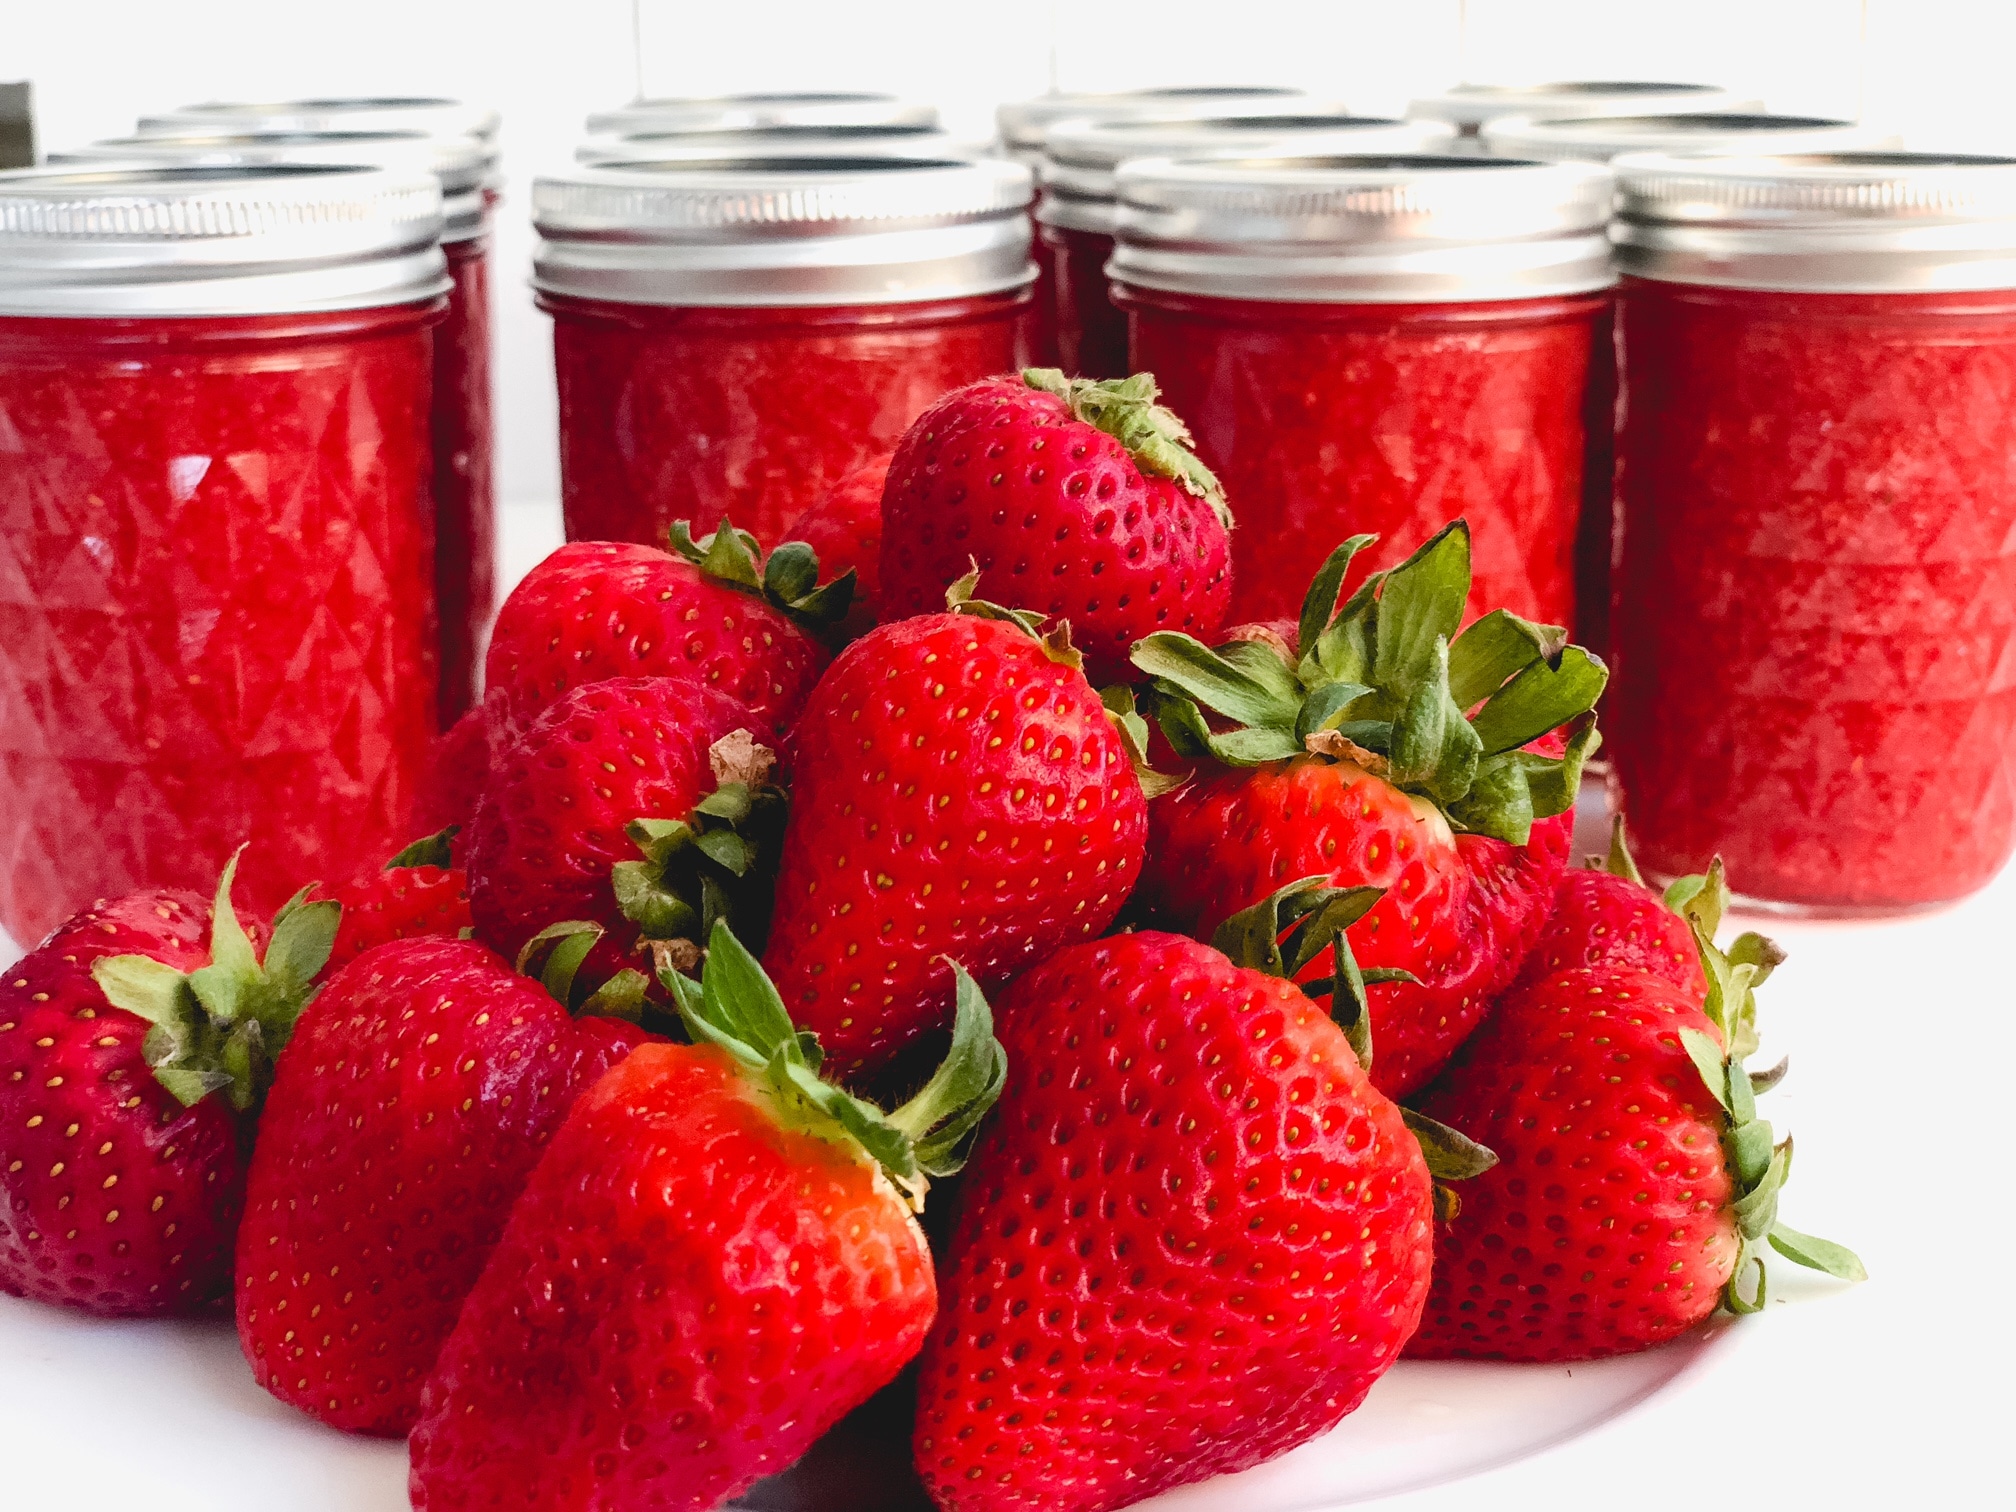 Old Fashioned Sure-Jell Strawberry Freezer Jam Recipe